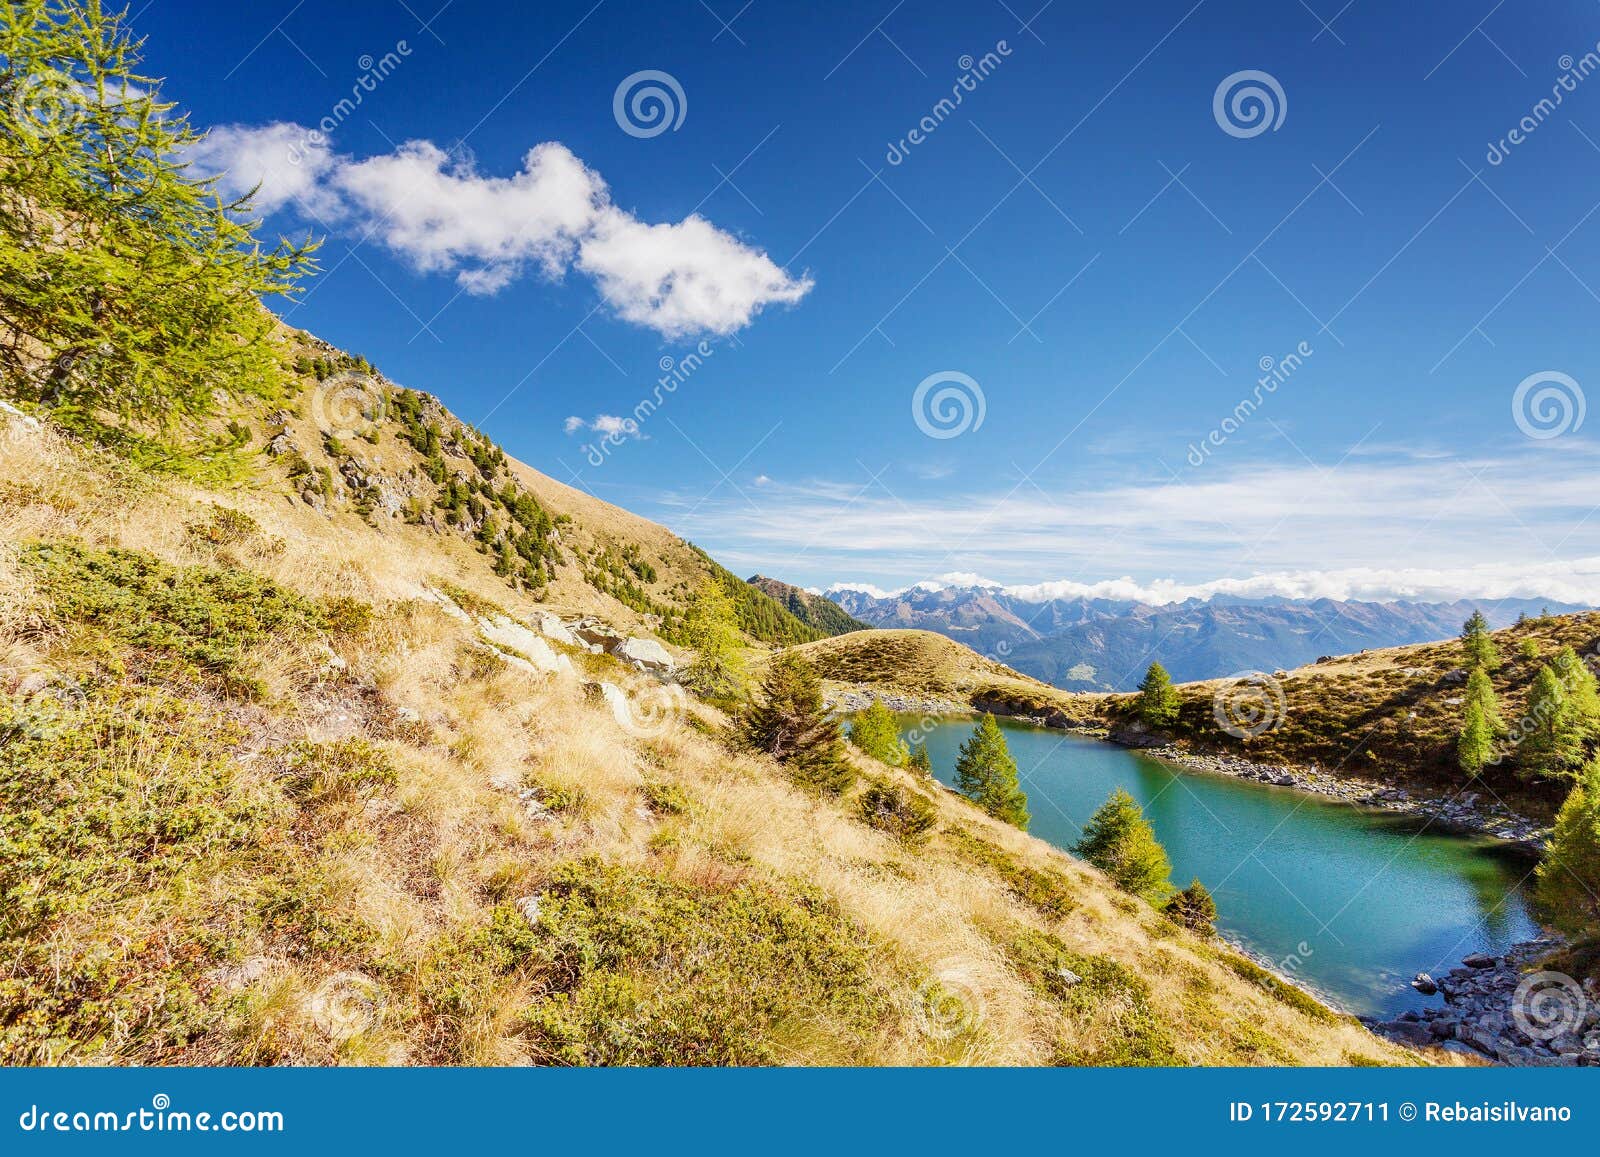 rhaetian alps - colina lake